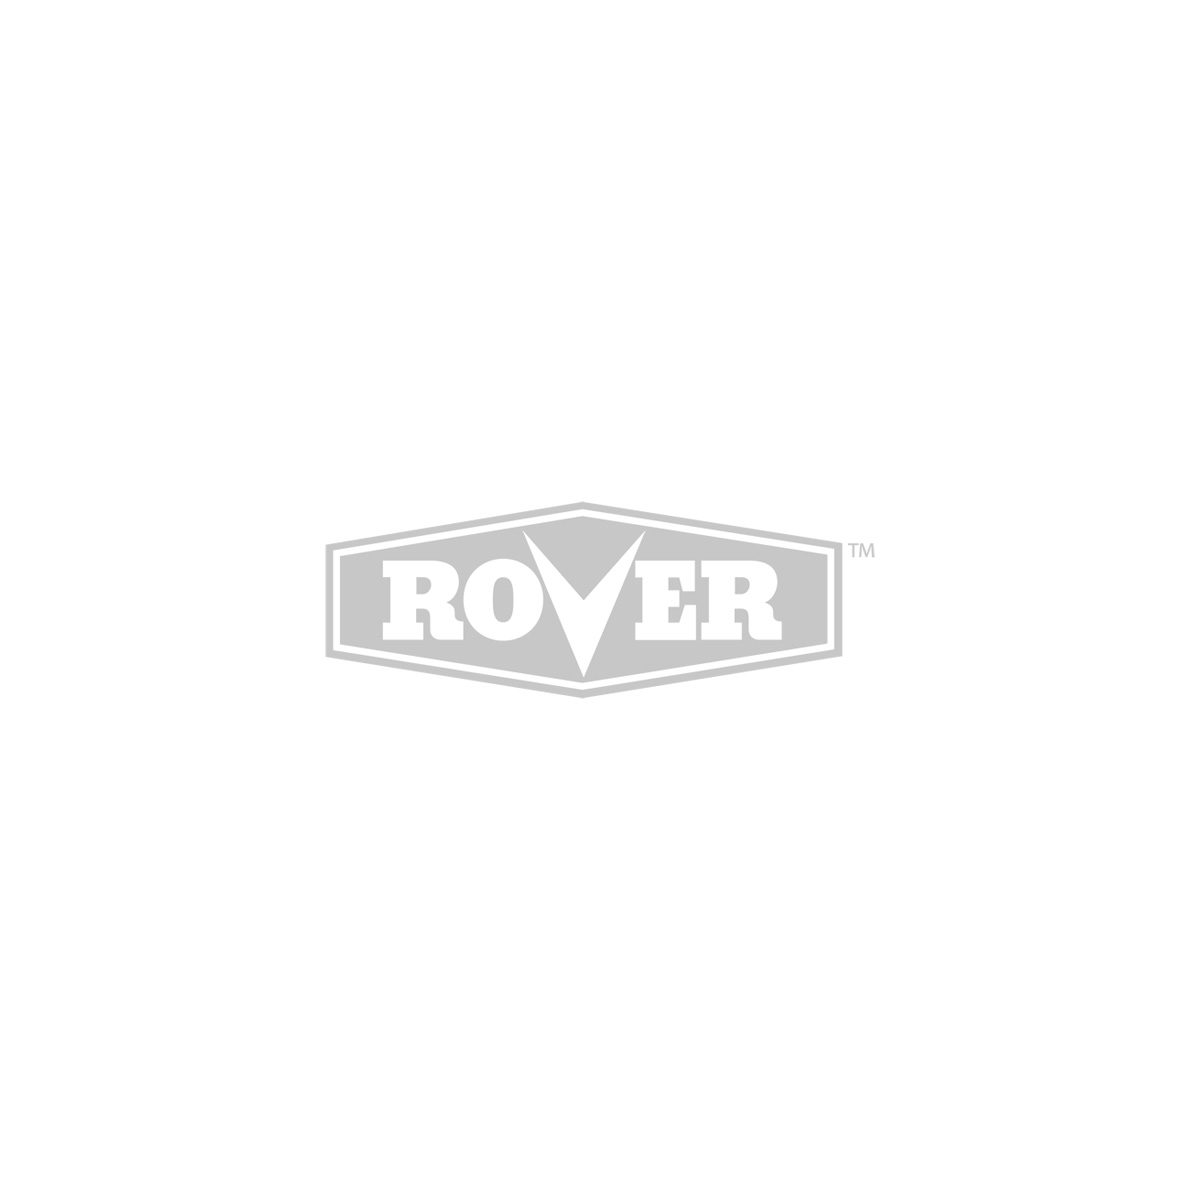 Rover RZT S 46 Blade